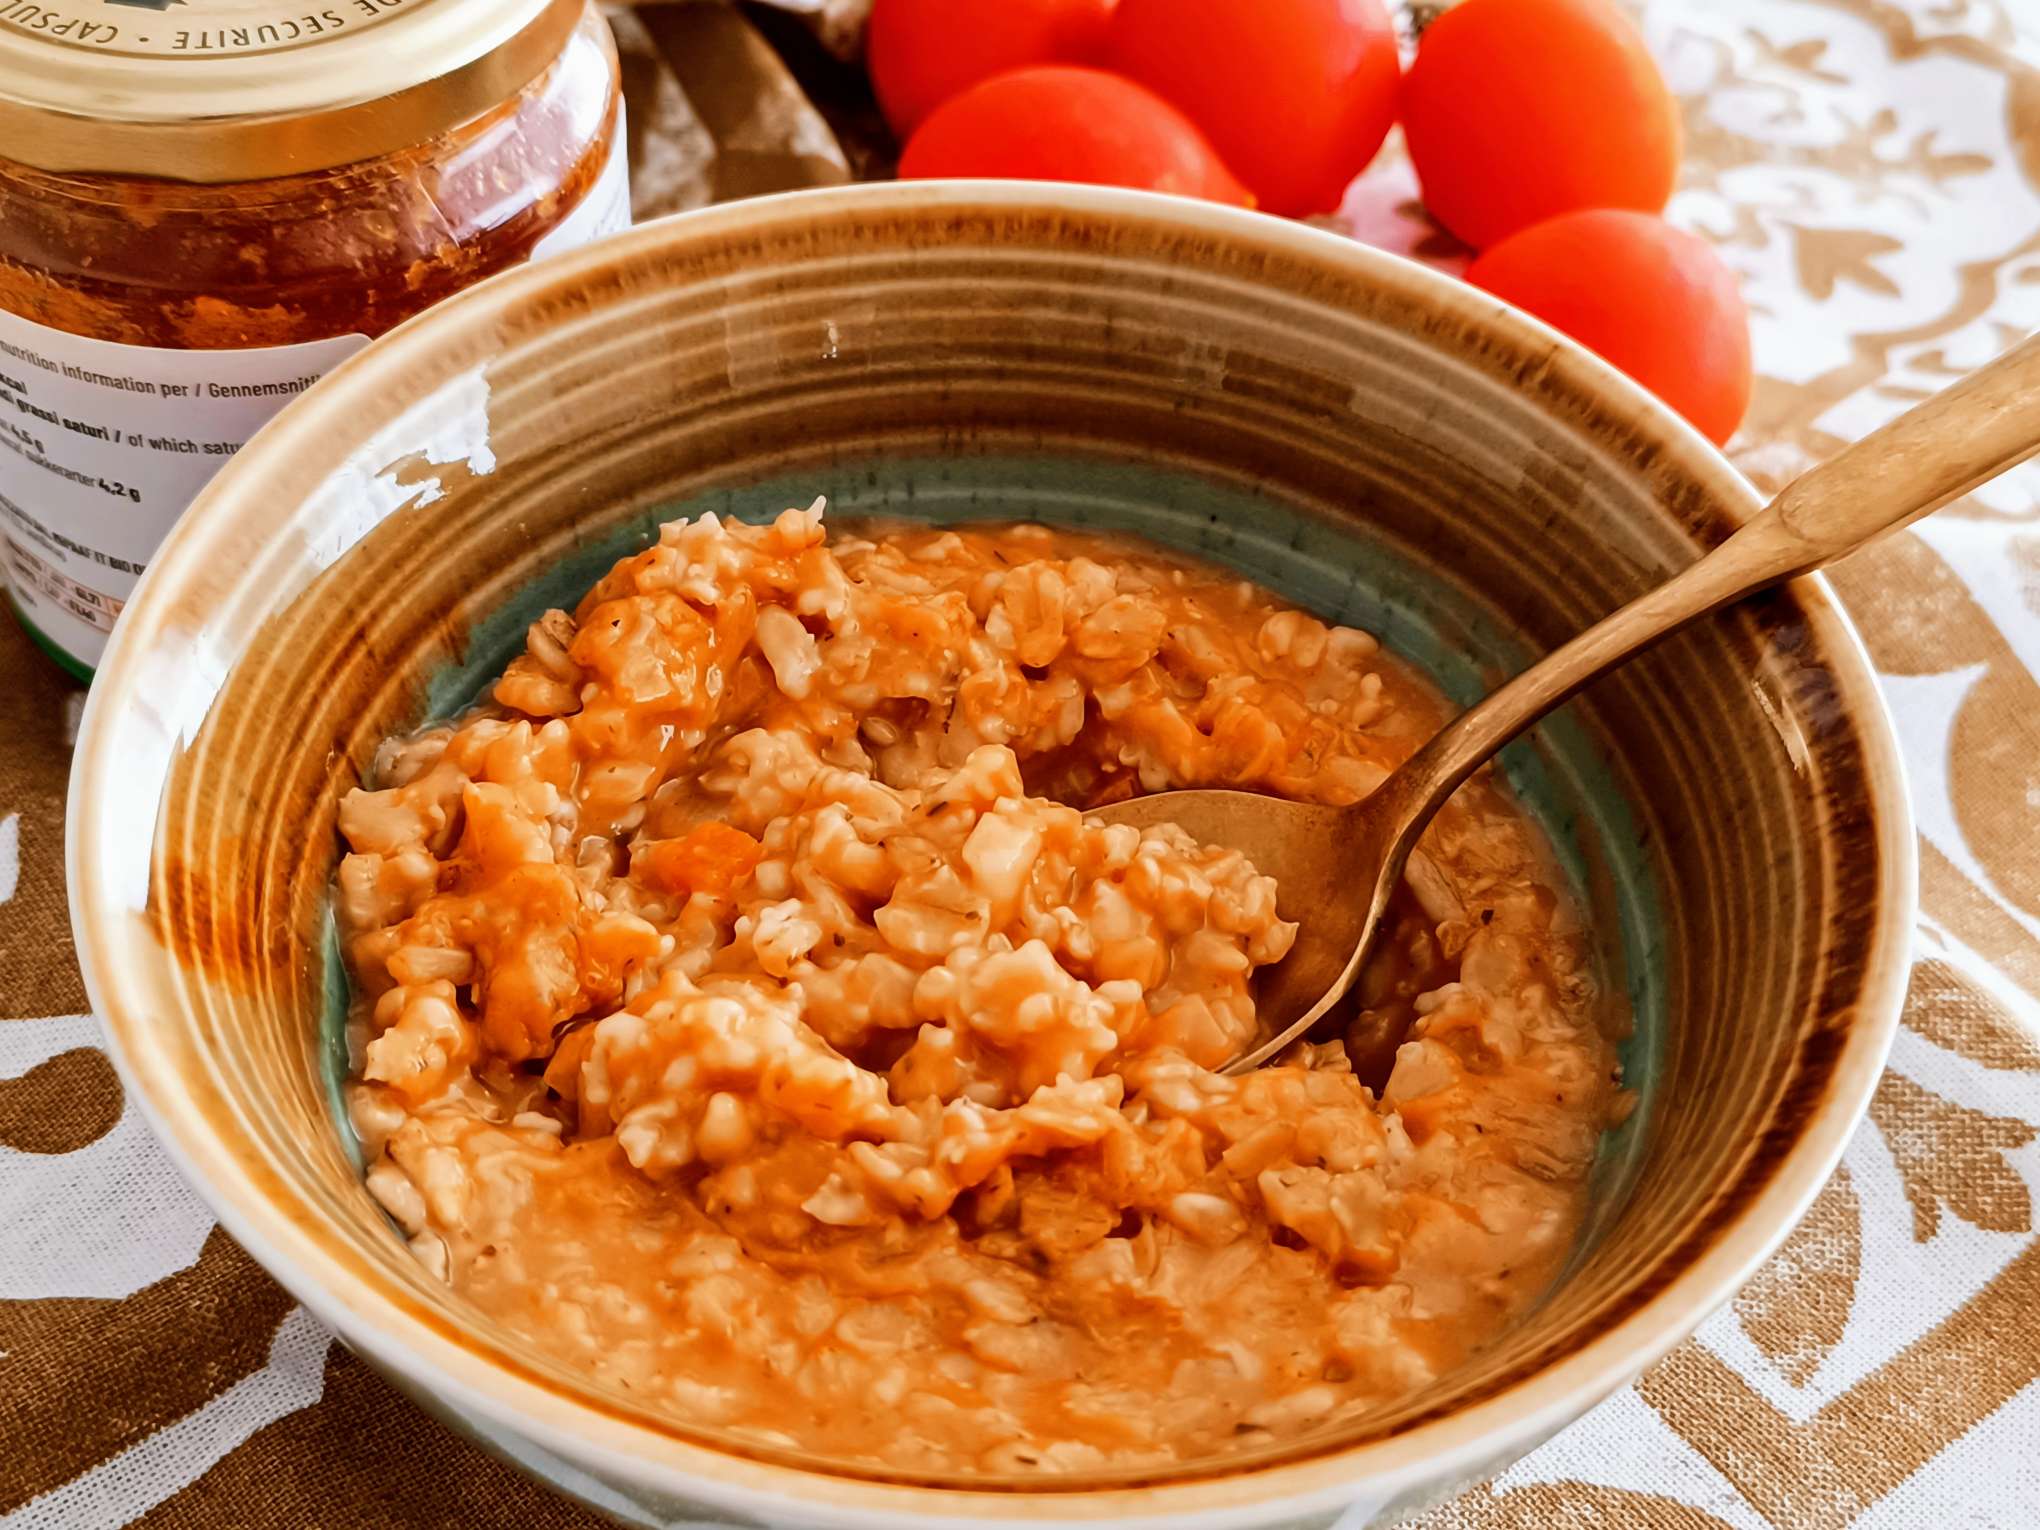 Porridge salato al pomodoro ricetta vegana senza latte e senza formaggio